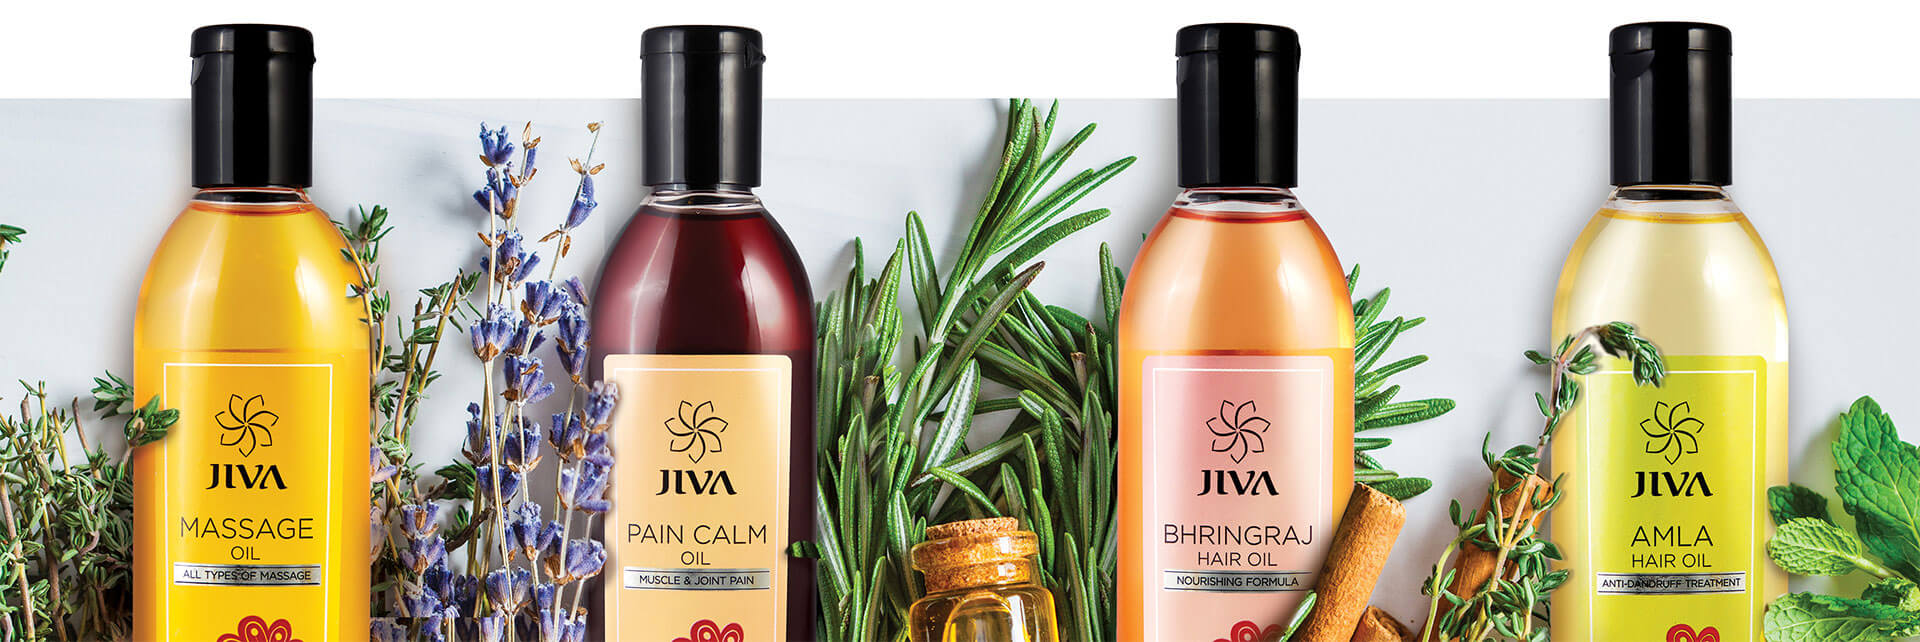 illustration - set of oils from Jiva